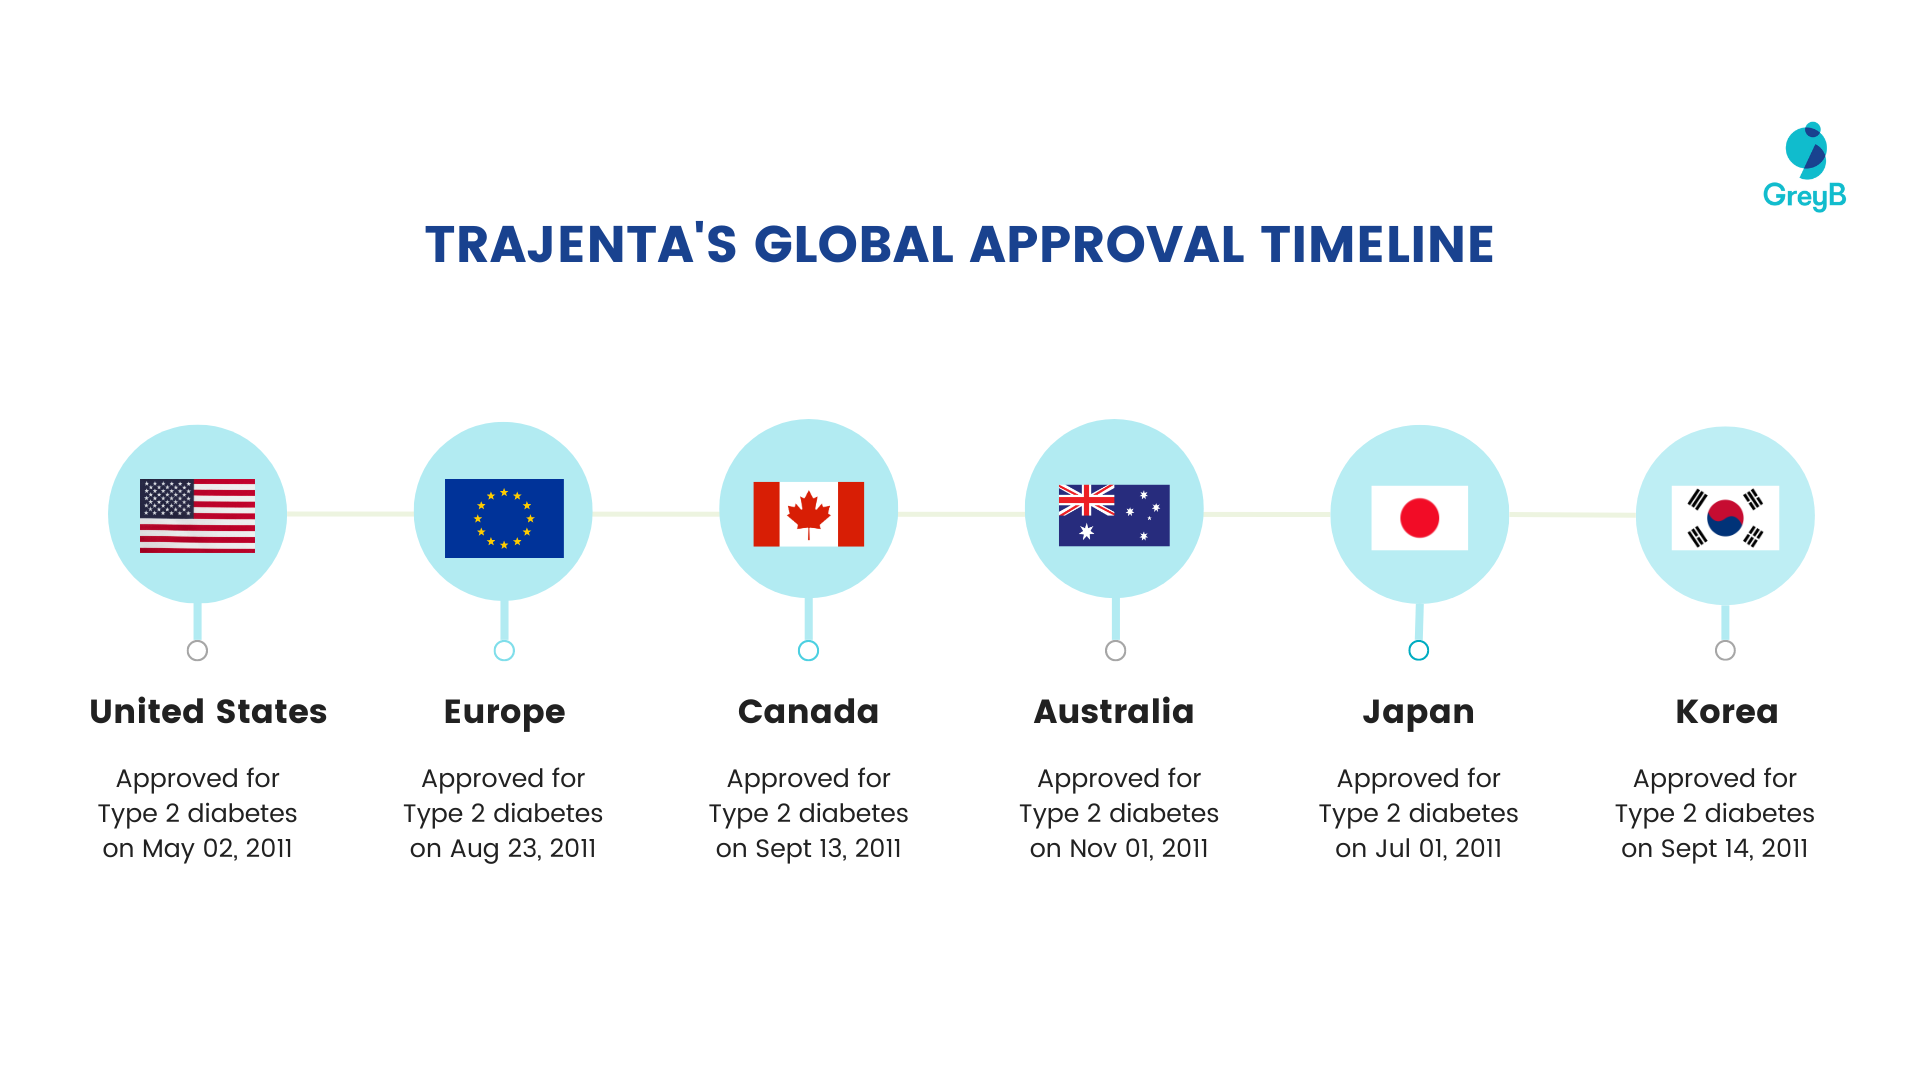 TRAJENTA'S GLOBAL APPROVAL TIMELINE